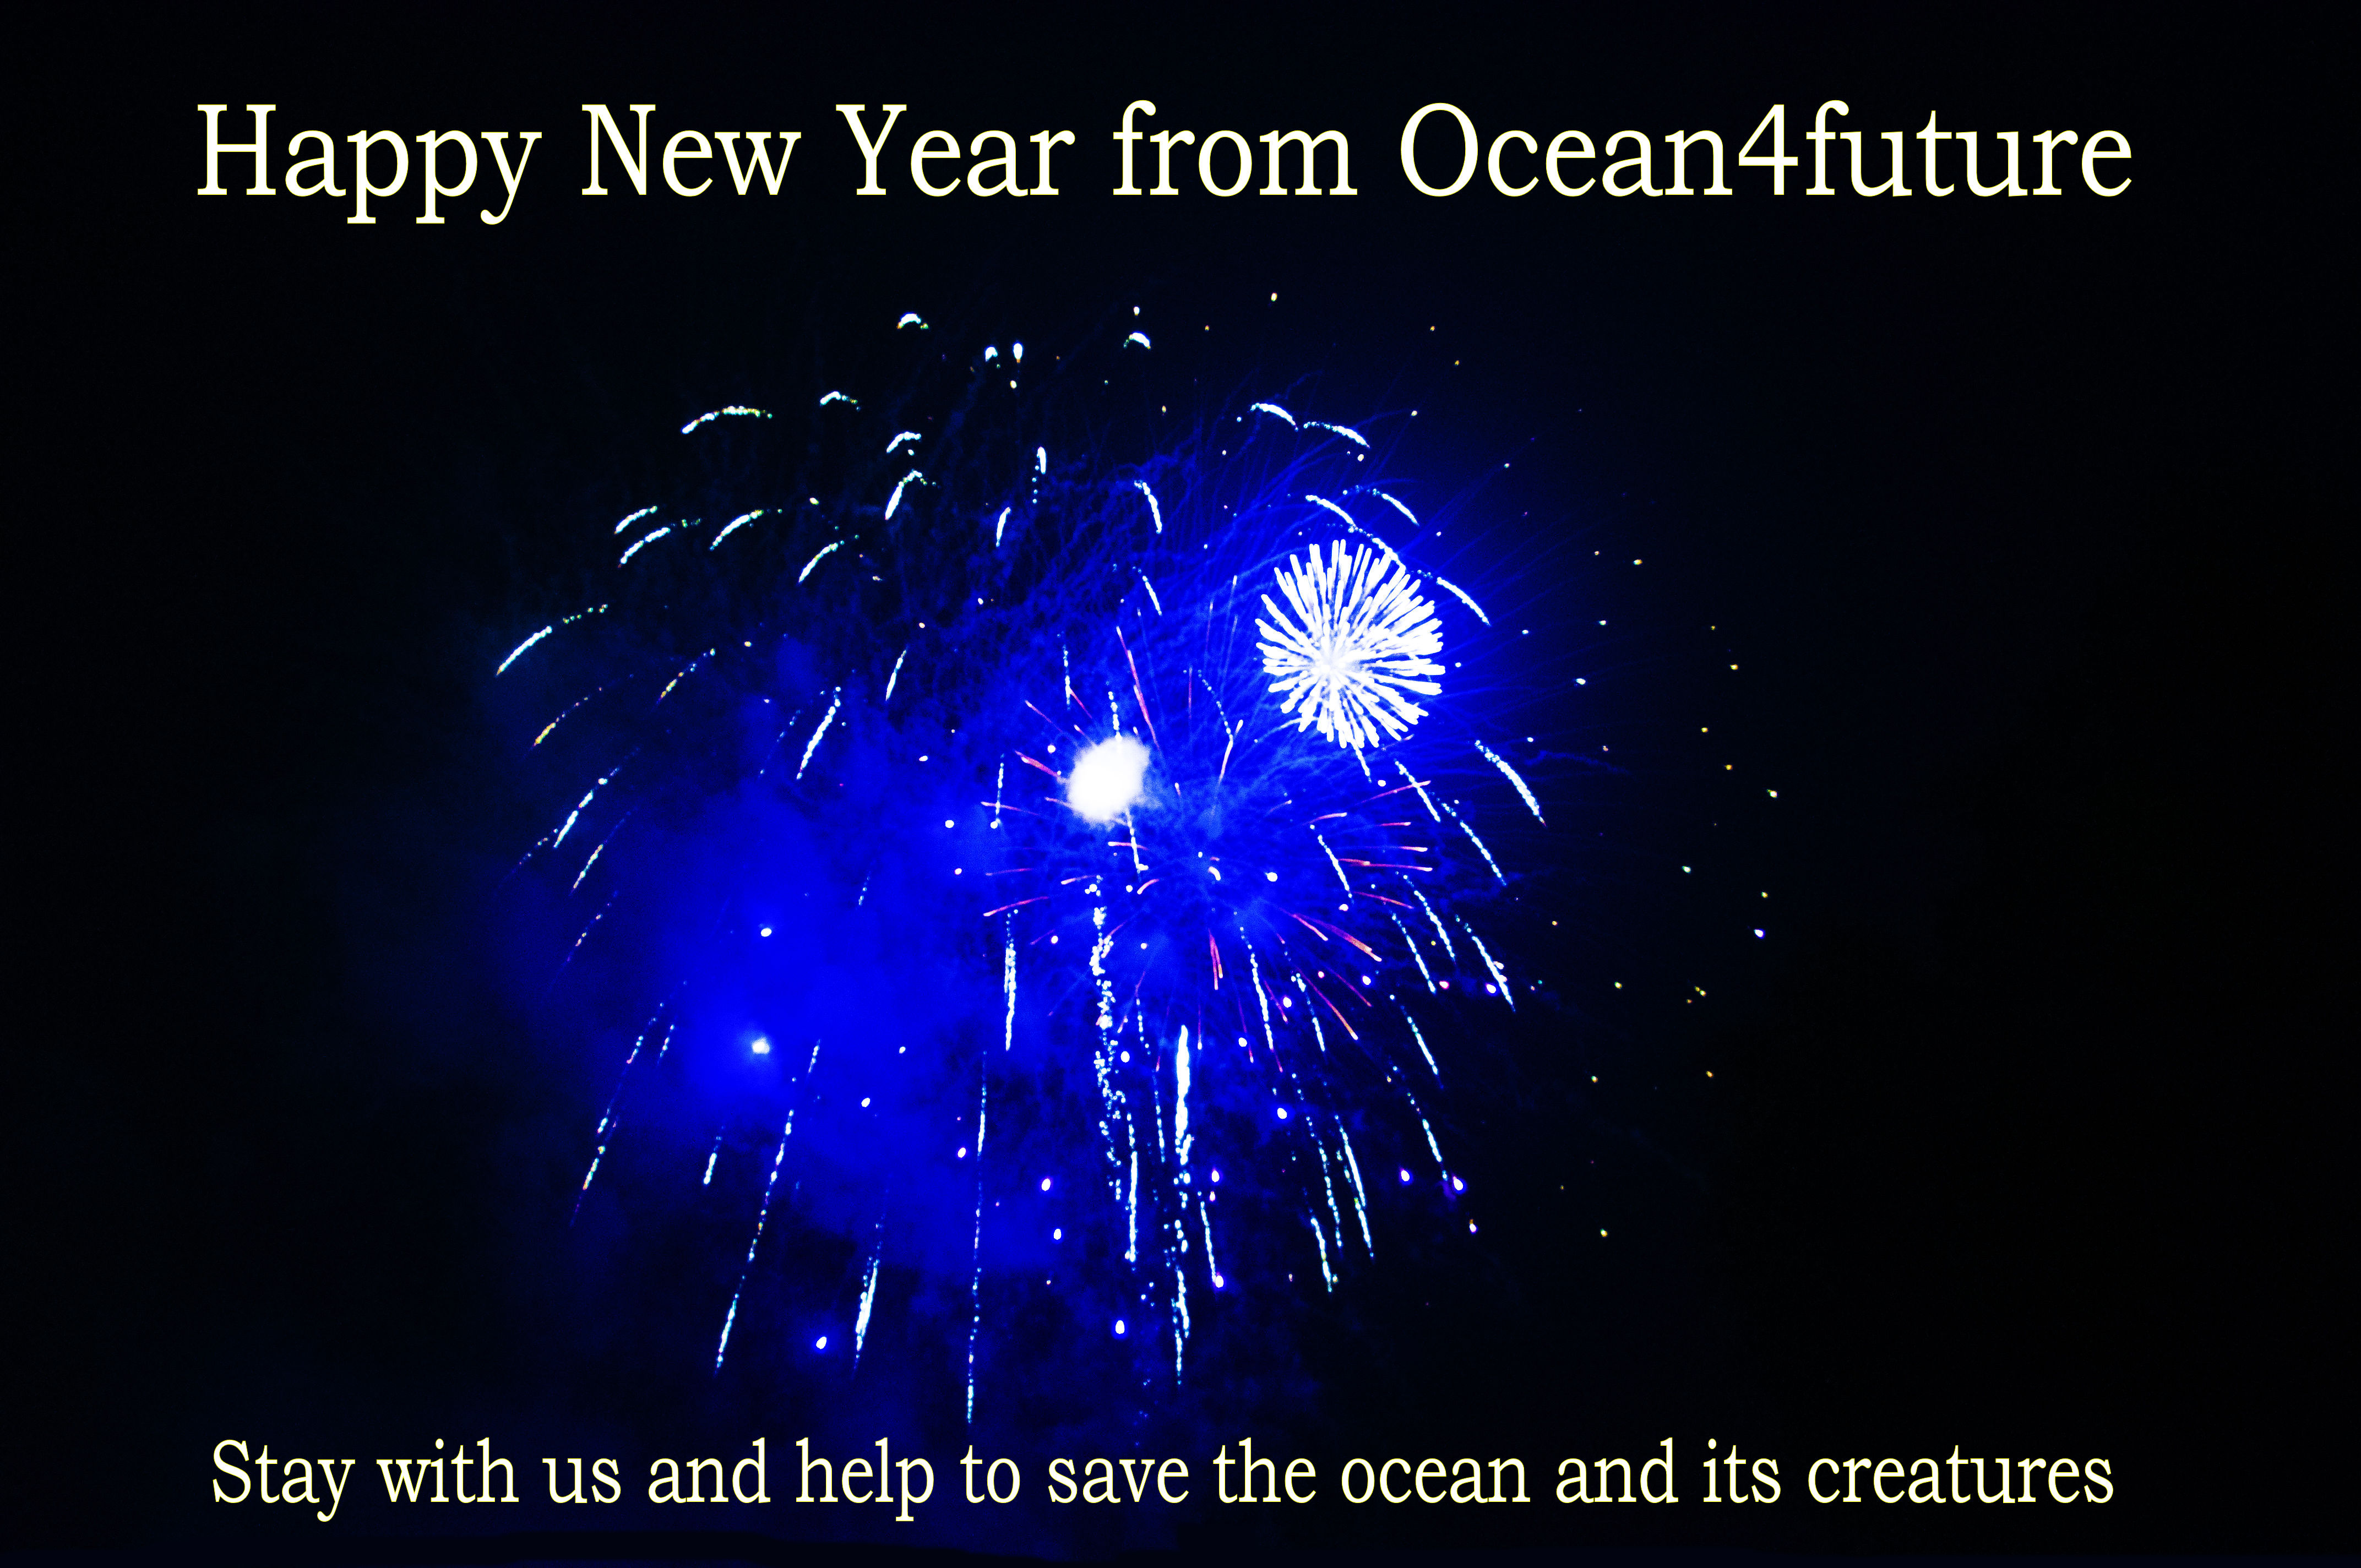 Ocean4future: Happy and Serene 2017